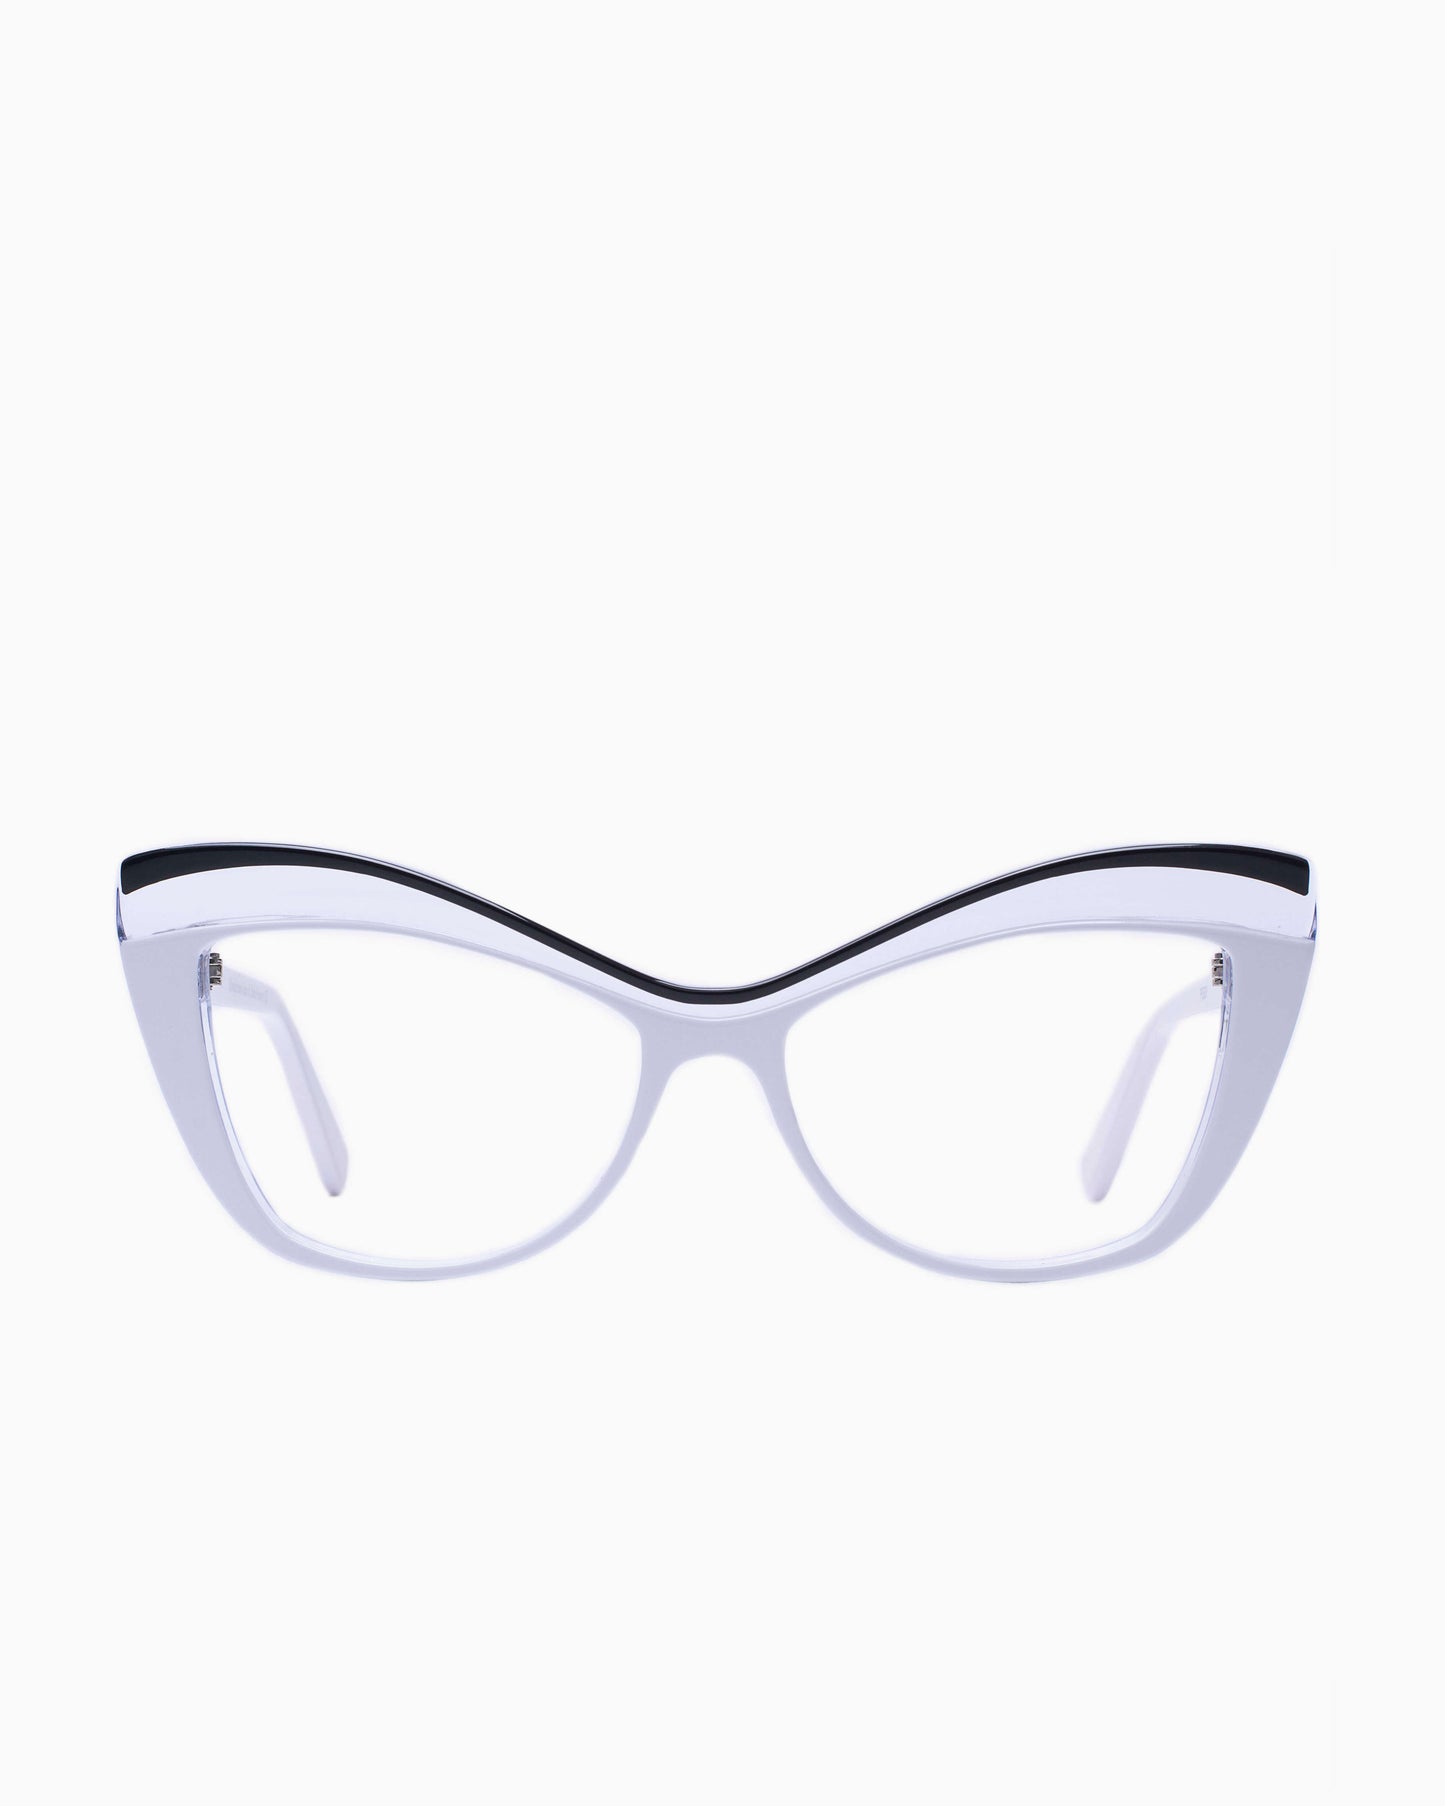 TRACTION - PEGGY - WhiteBlack | glasses bar